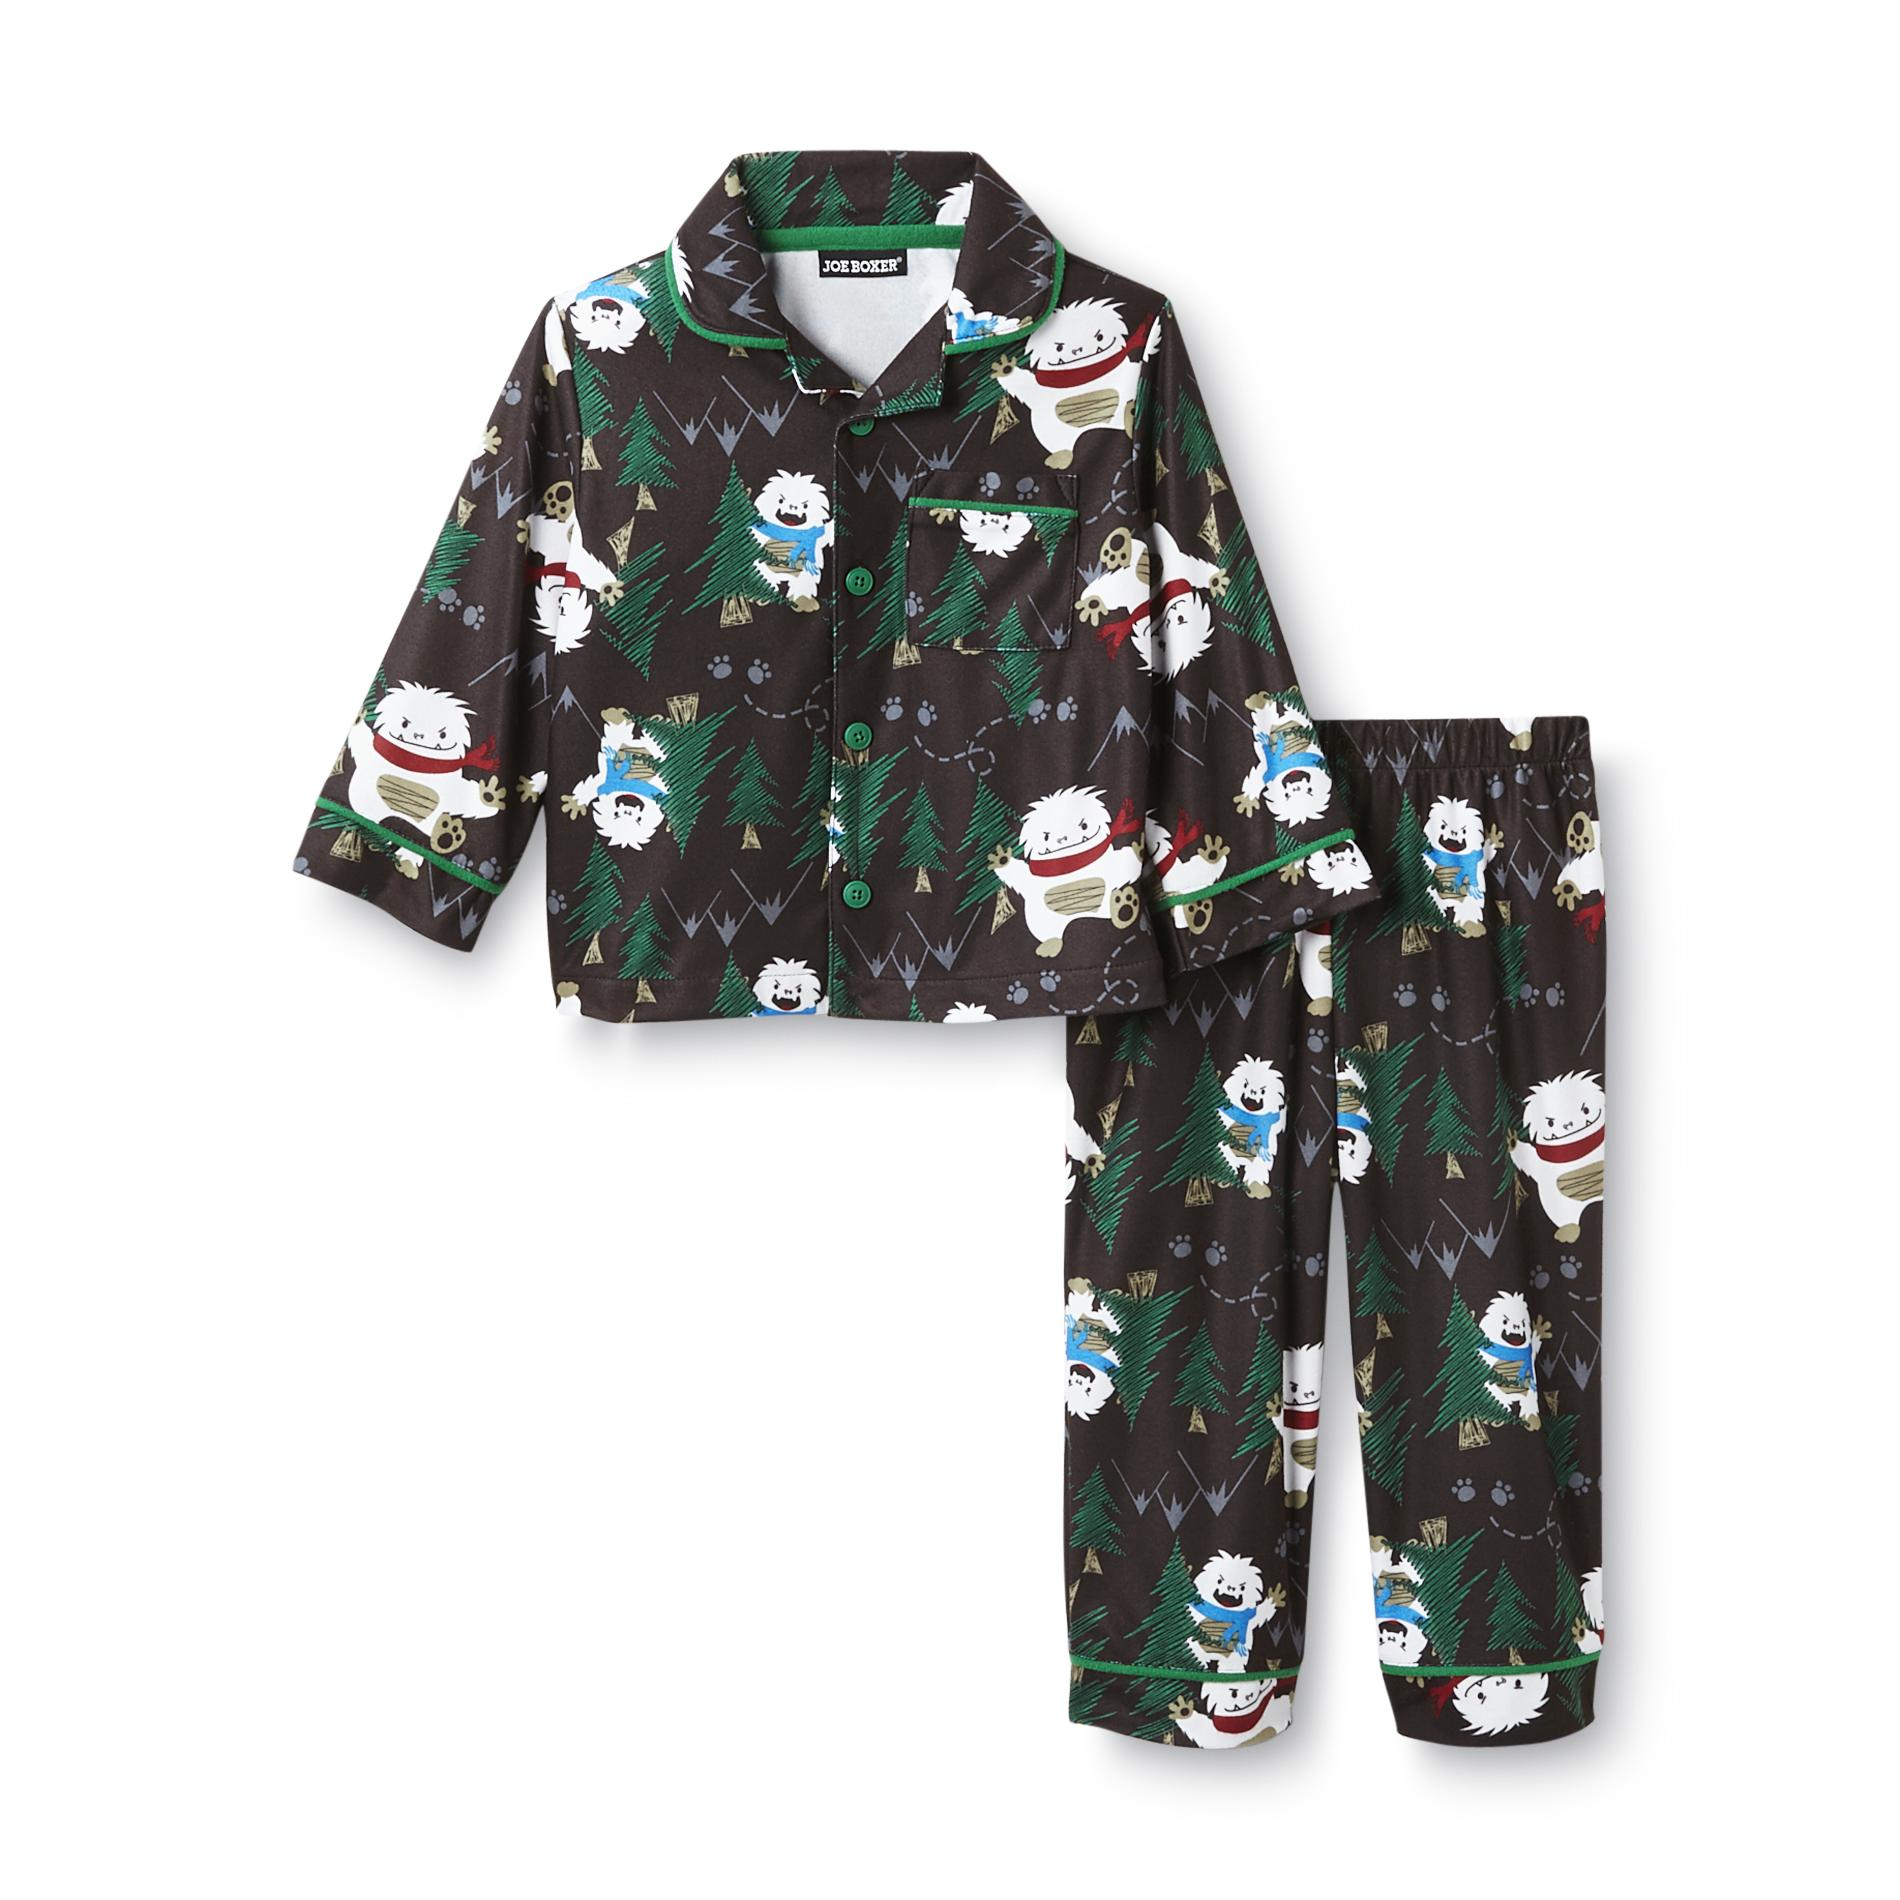 Joe Boxer Infant & Toddler Boy's Flannel Pajamas - Snow Monster